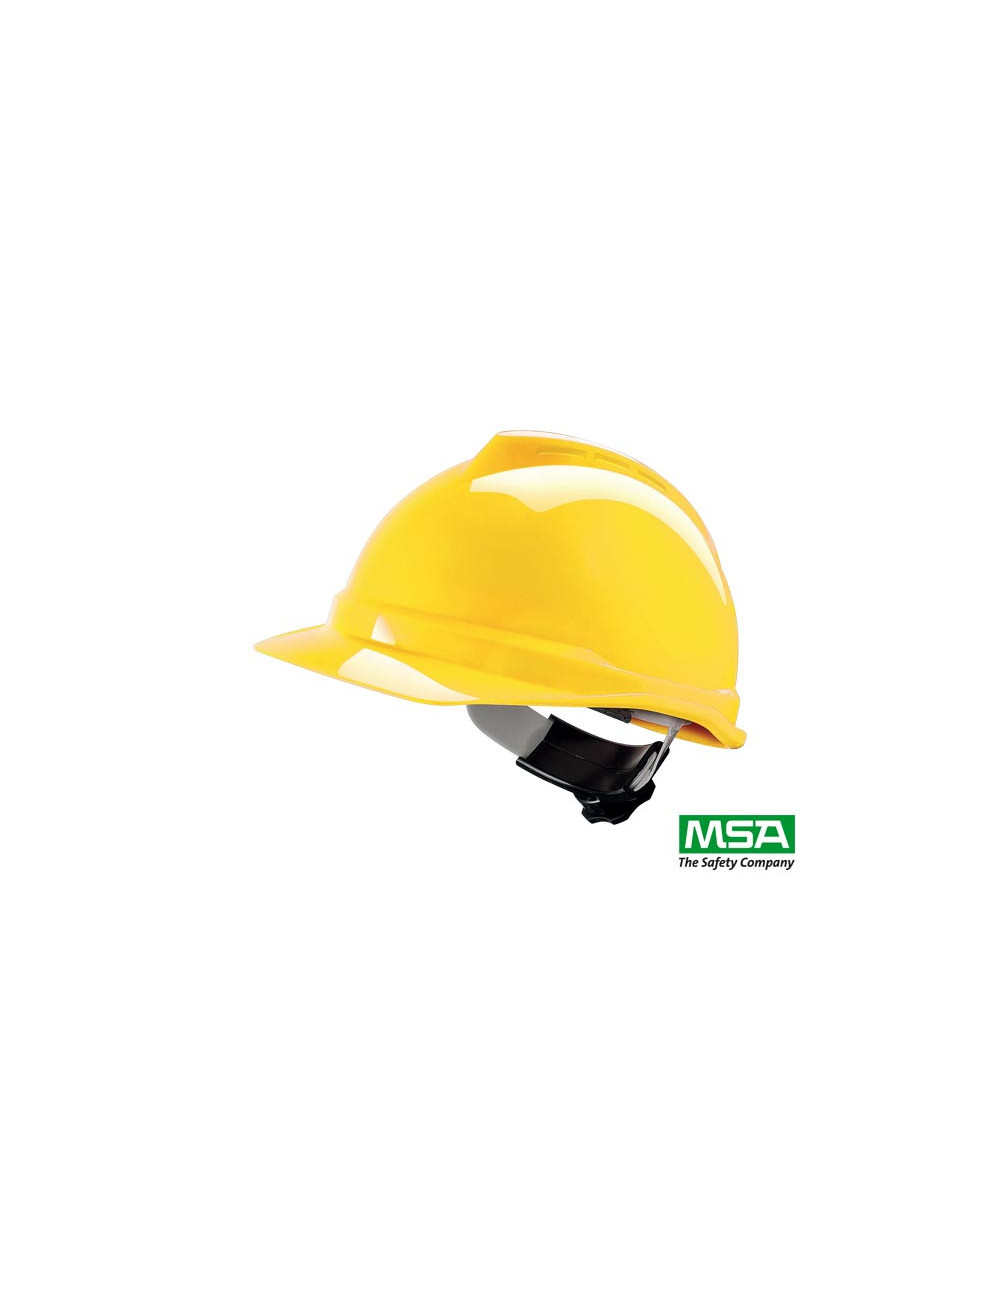 Helmet y yellow Msa Msa-kas-vg500